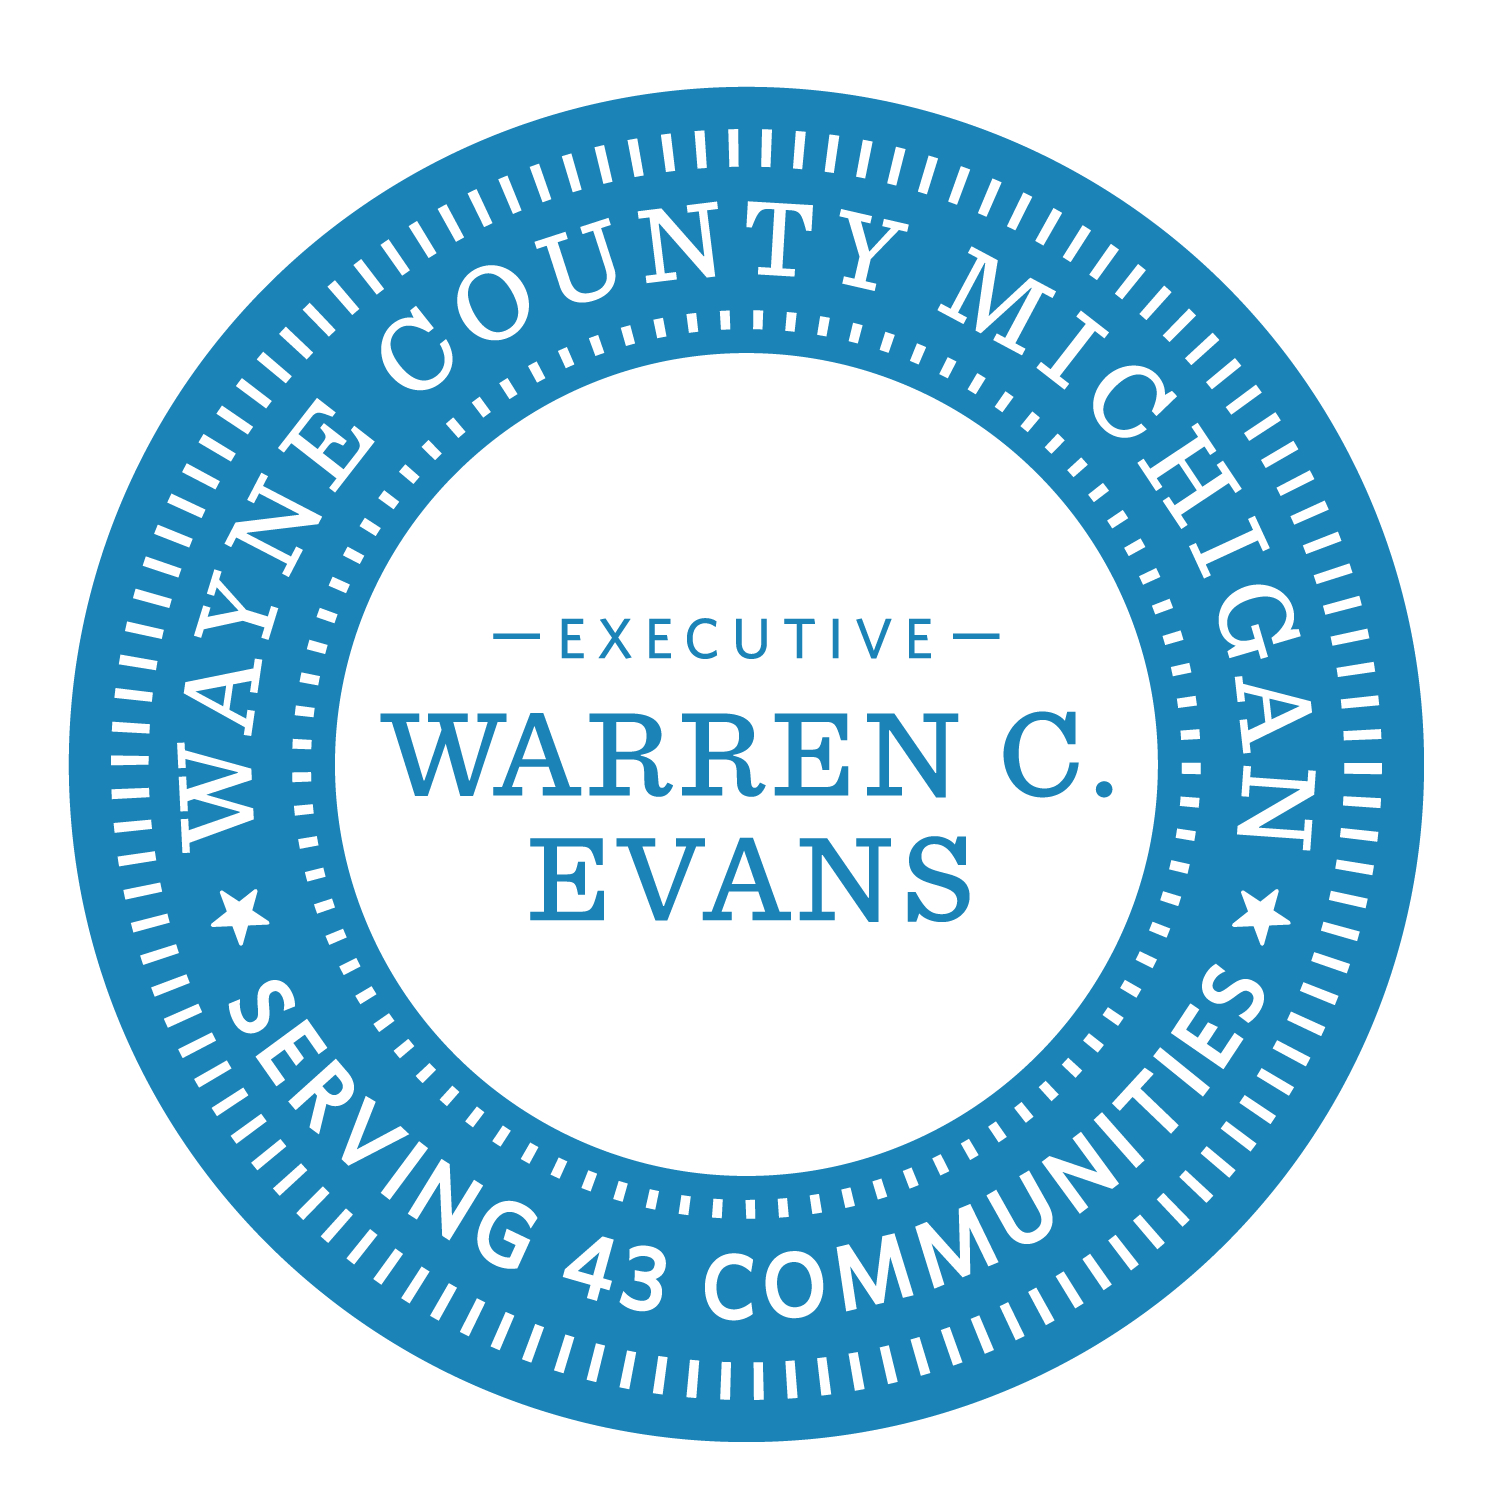 Wayne County Michigan Executive Warren Evans logo